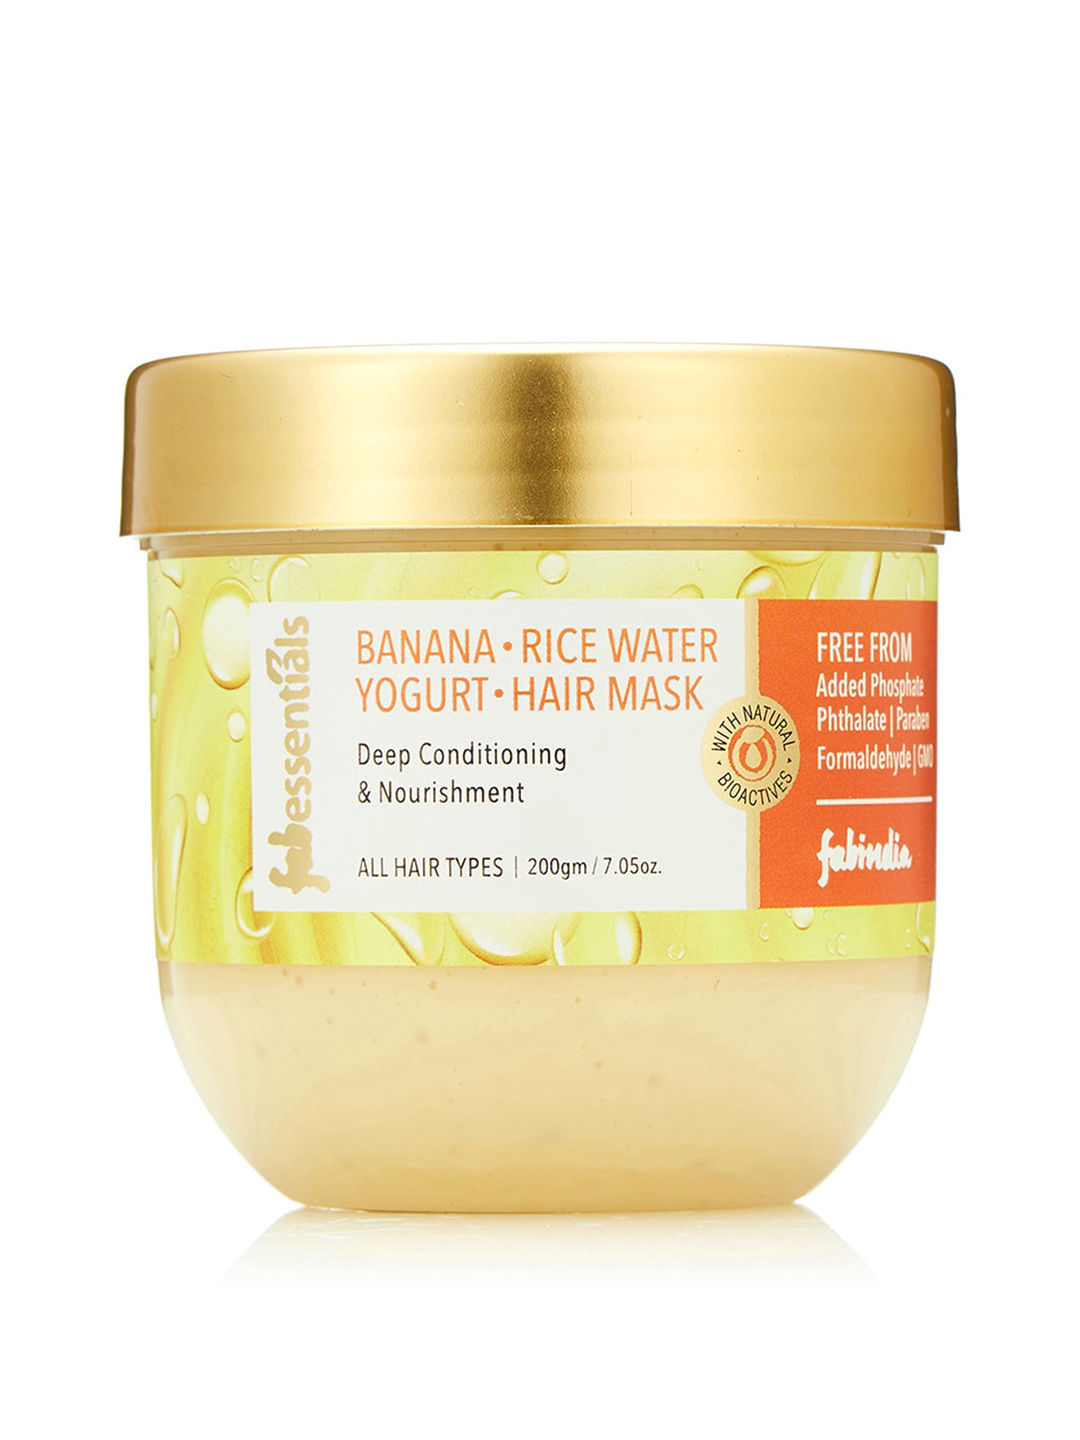 Share more than 159 aloe vera yogurt hair mask